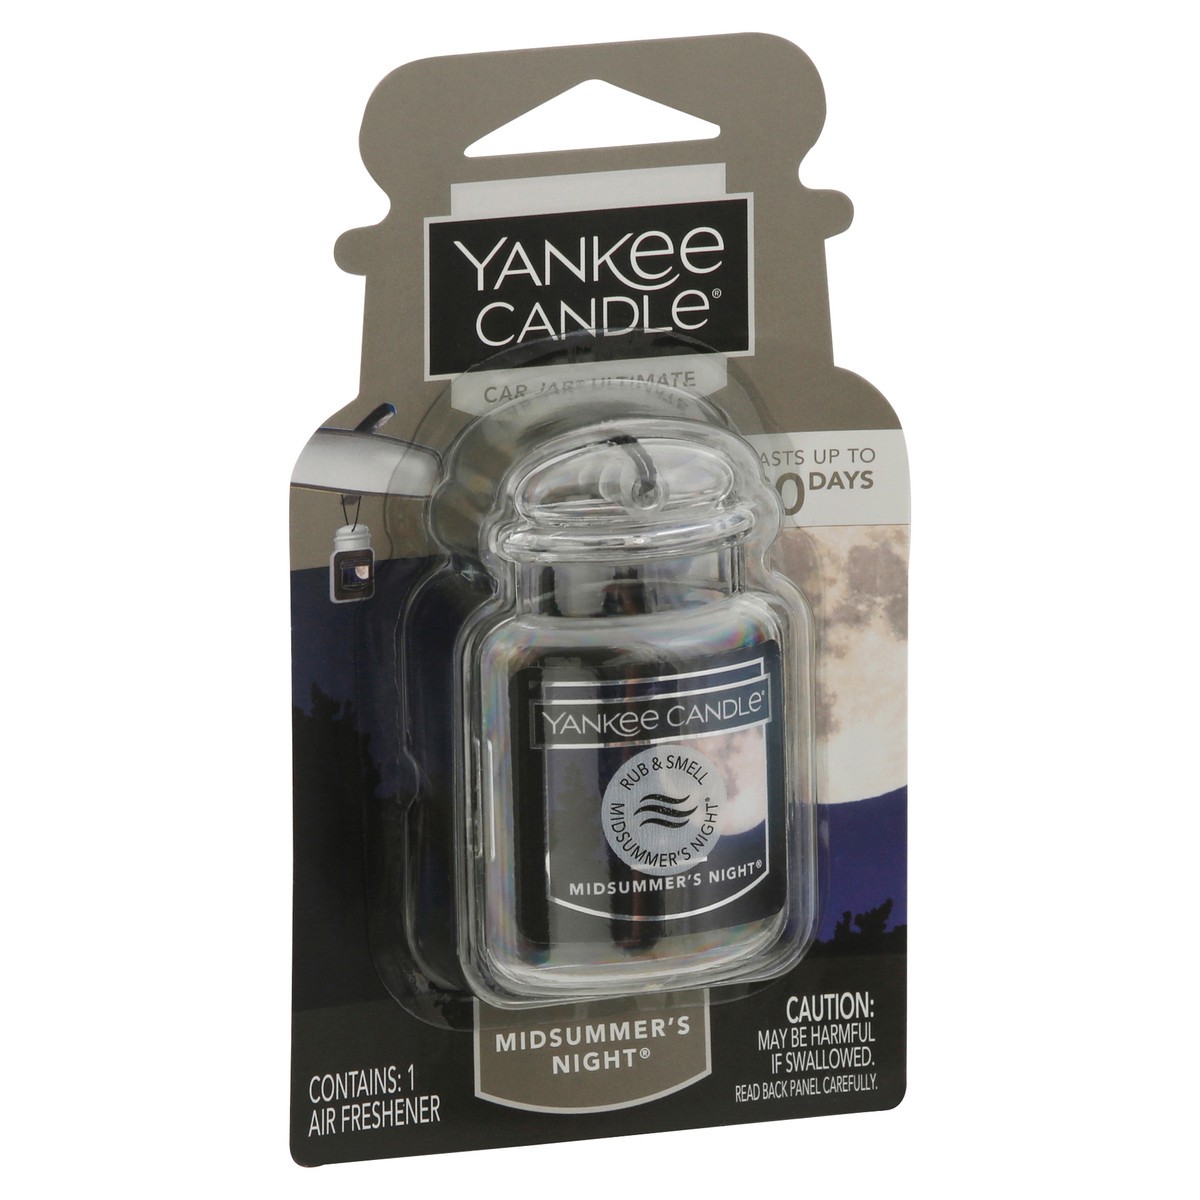 slide 2 of 9, Yankee Candle Car Jar Ultimate Midsummer's Night Air Freshener, 1 ct